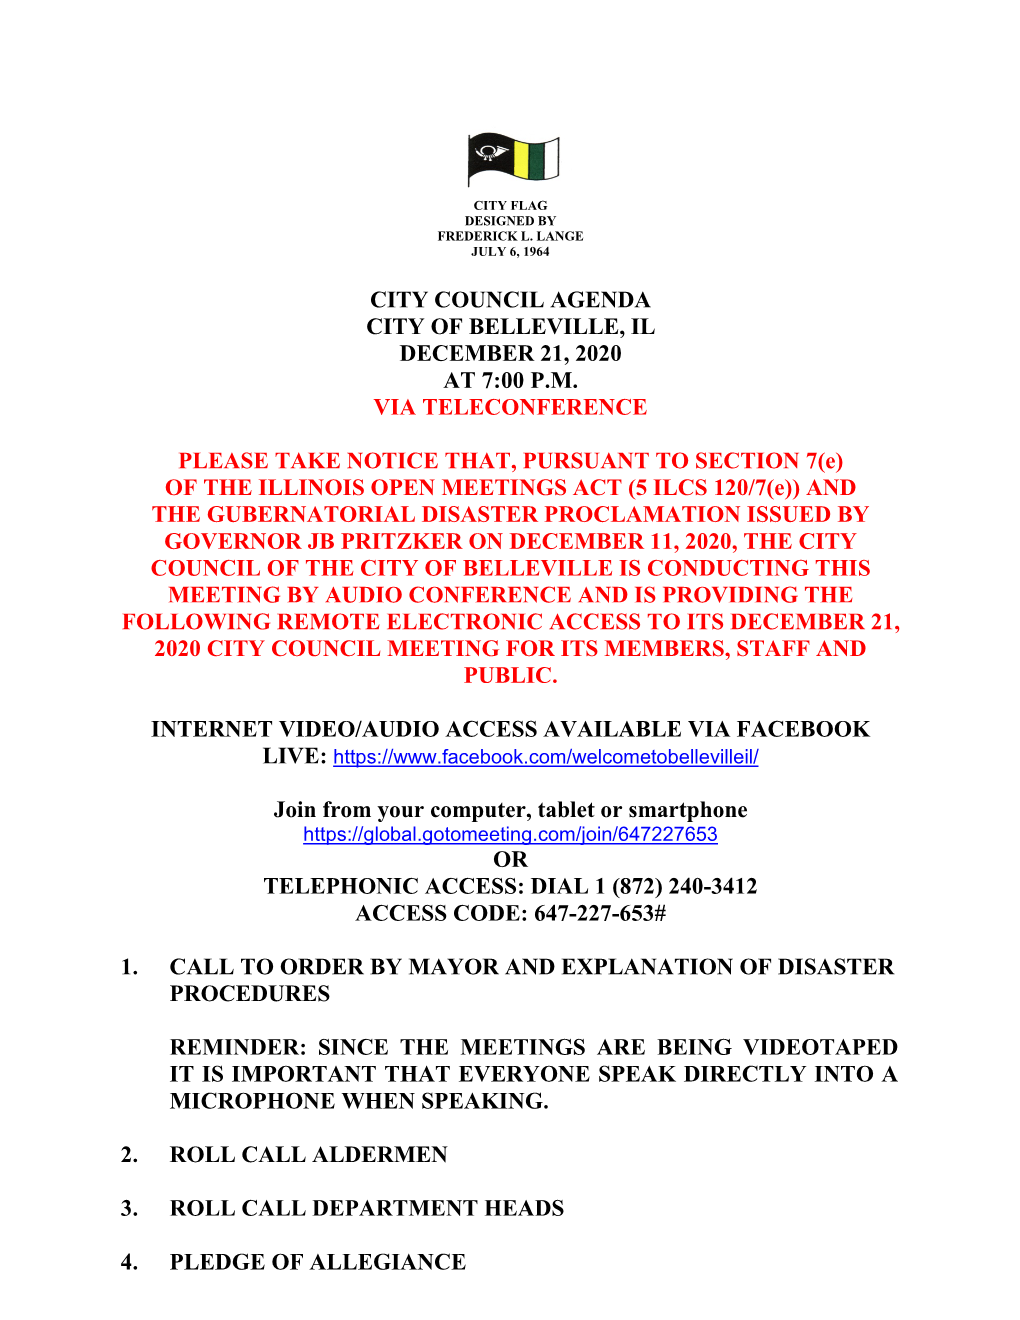 City Council Agenda City of Belleville, Il December 21, 2020 at 7:00 Pm